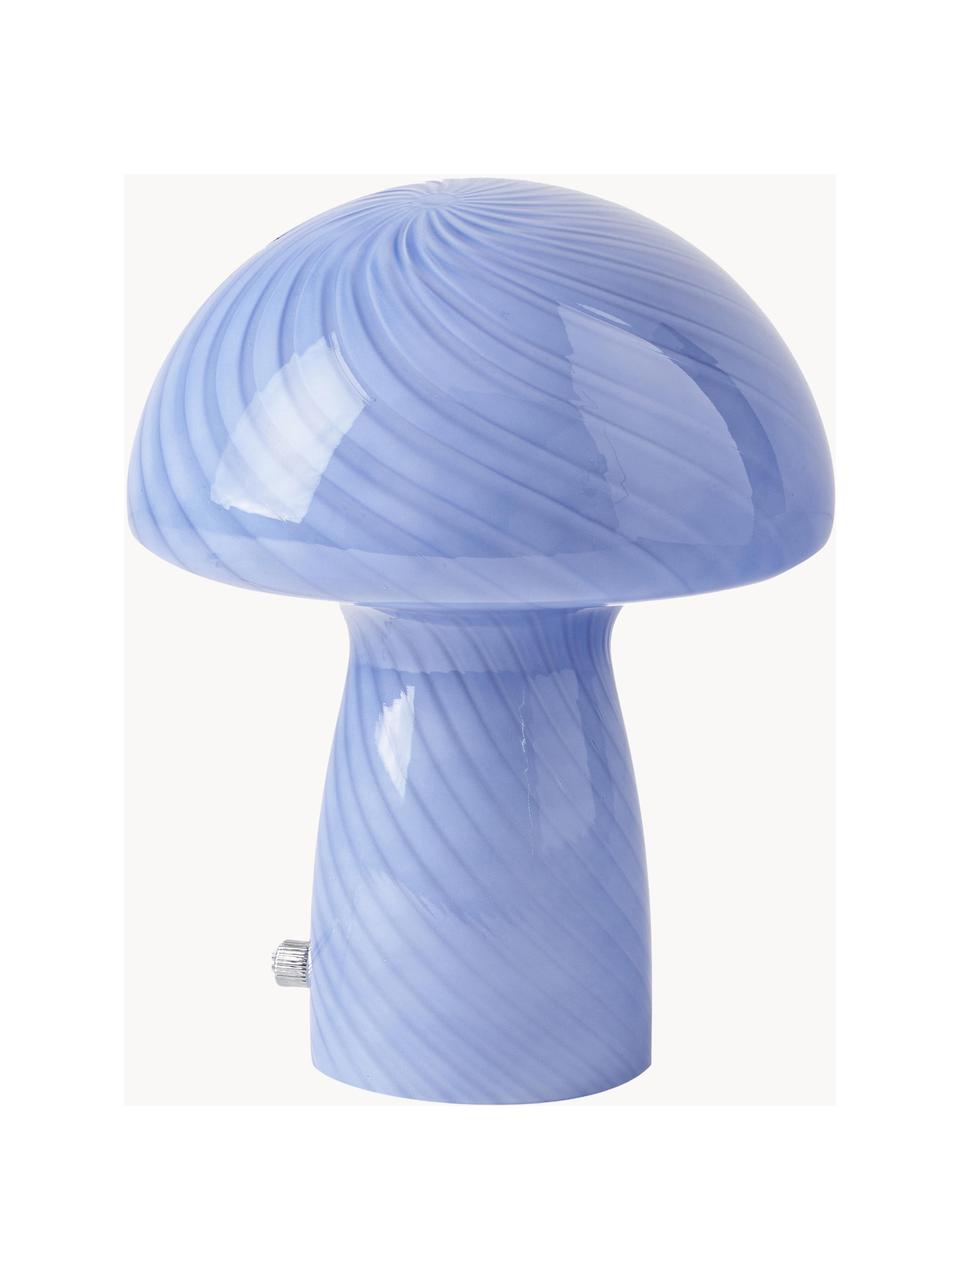 Kleine tafellamp Mushroom van glas, Lamp: glas, Grijsblauw, Ø 19 x H 23 cm